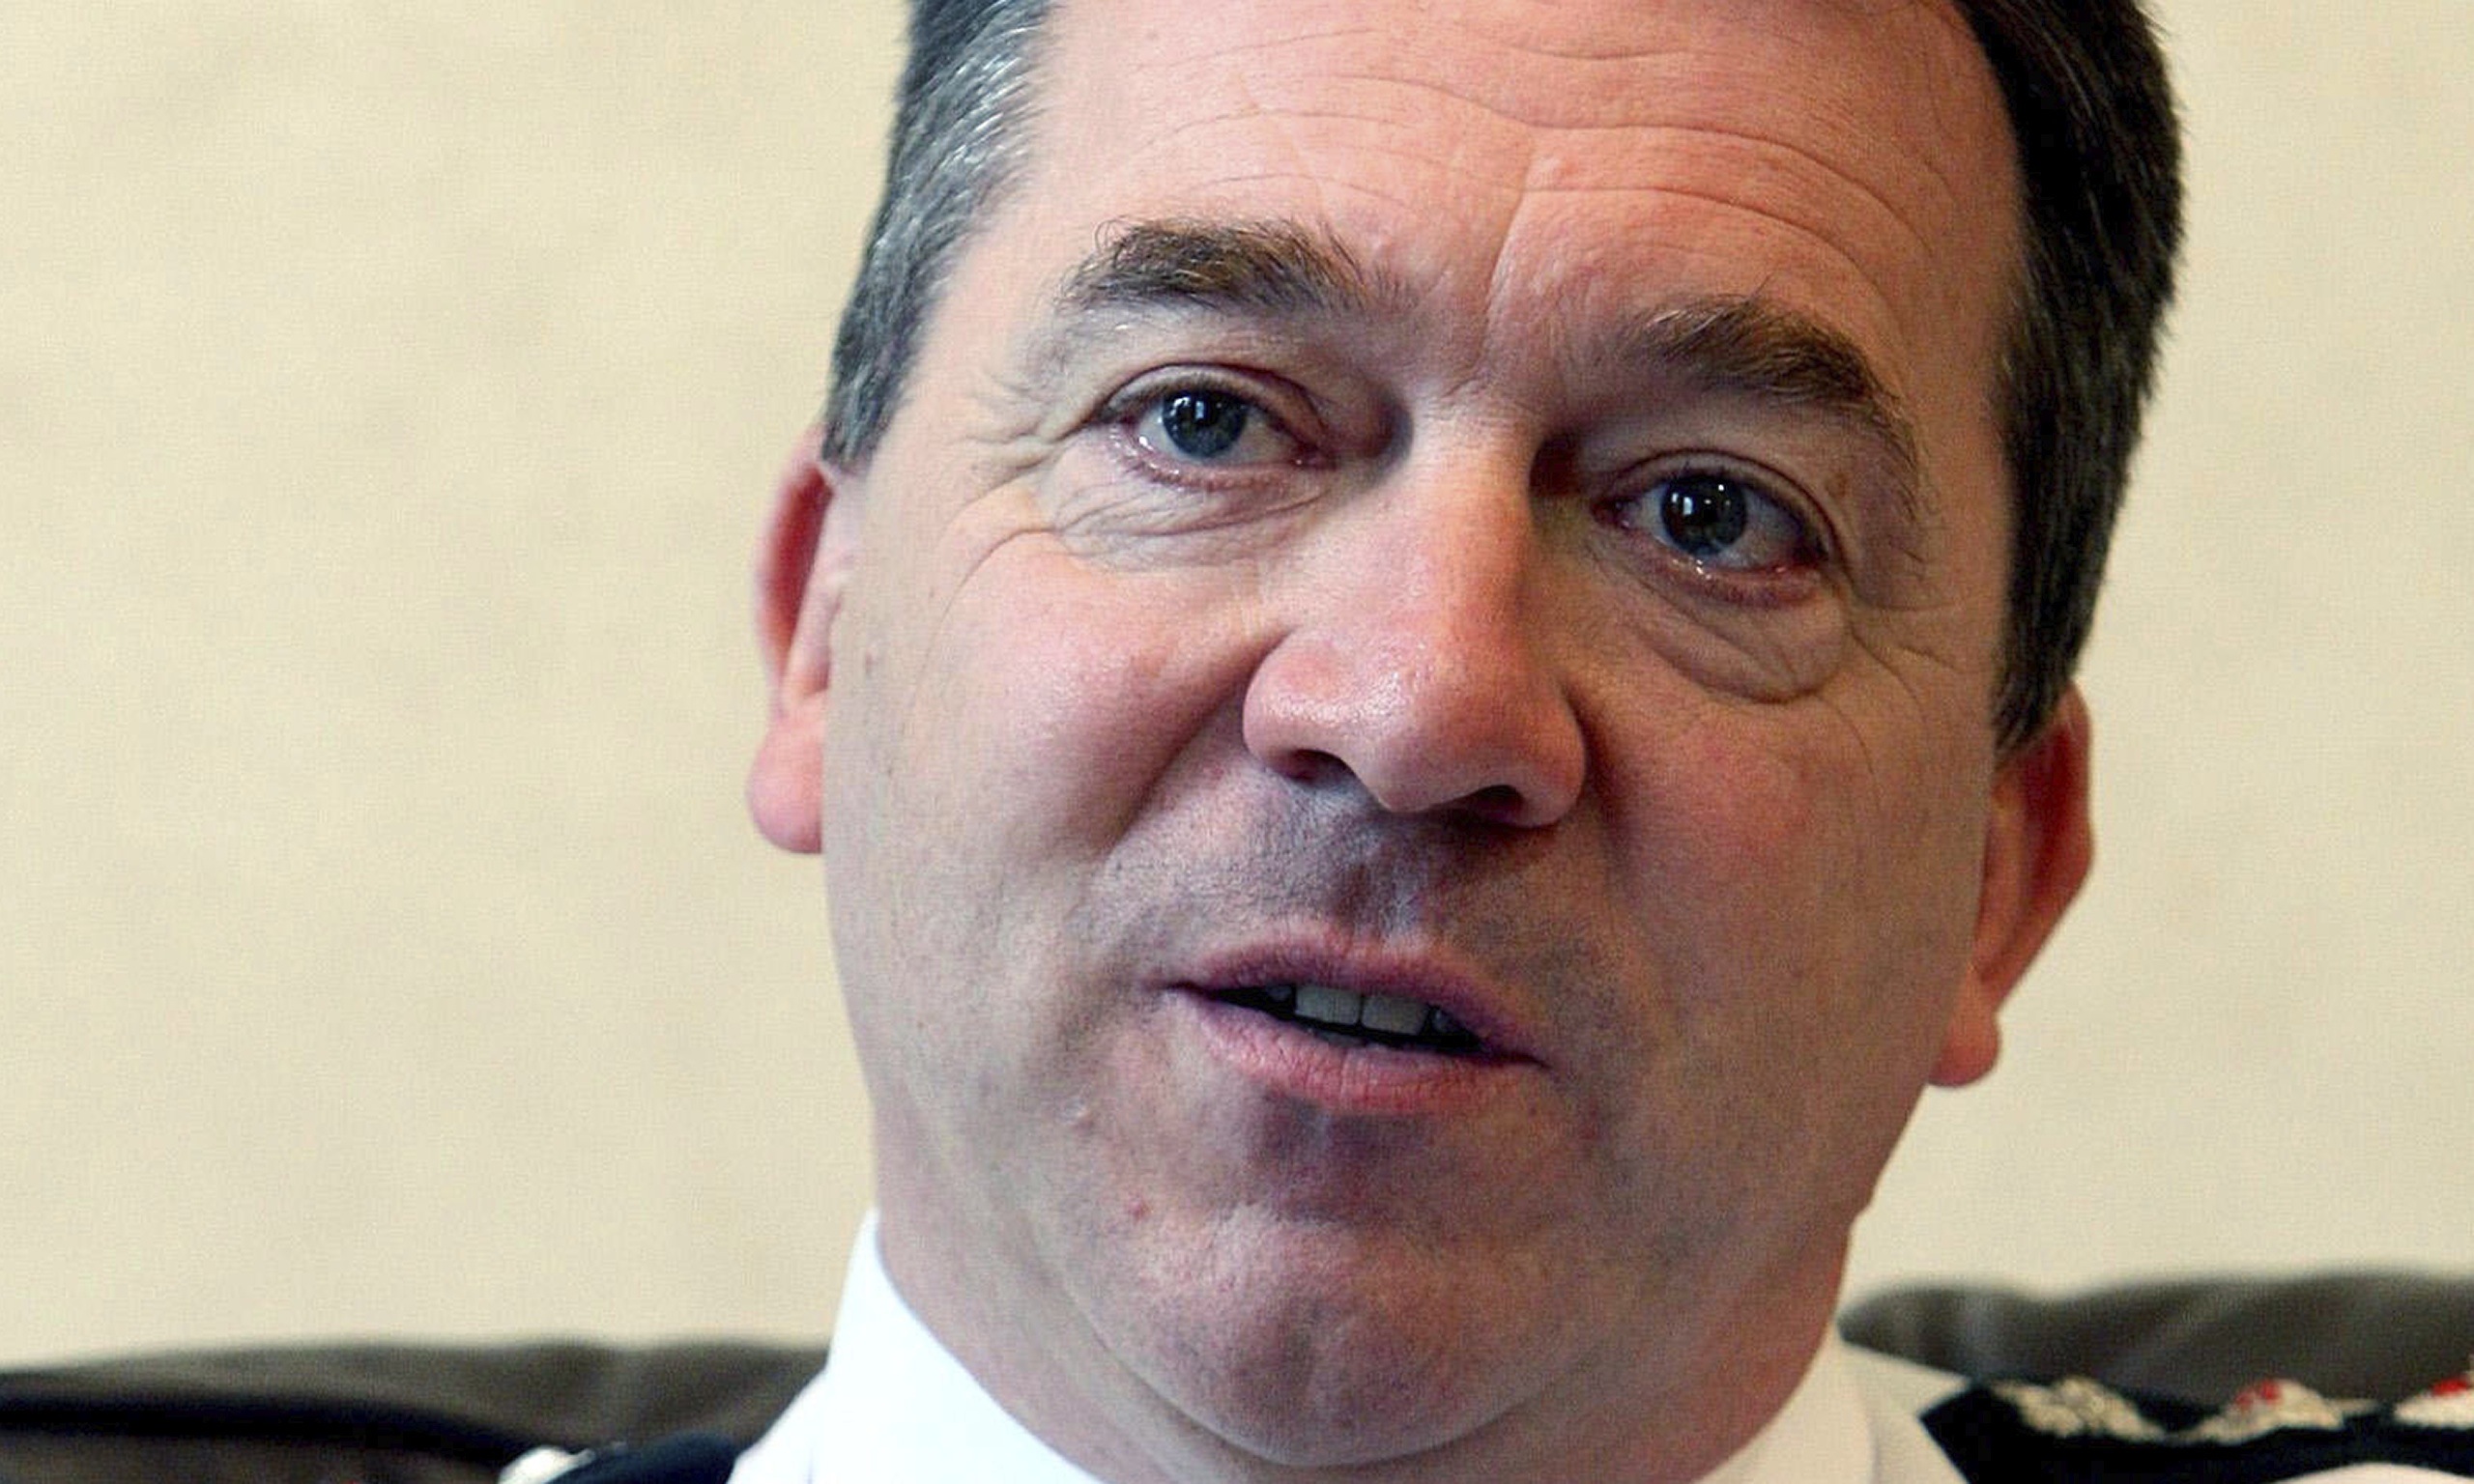 Belfast letter bomb sent to chief constable intercepted | UK news | The Guardian - Matt-Baggott-014